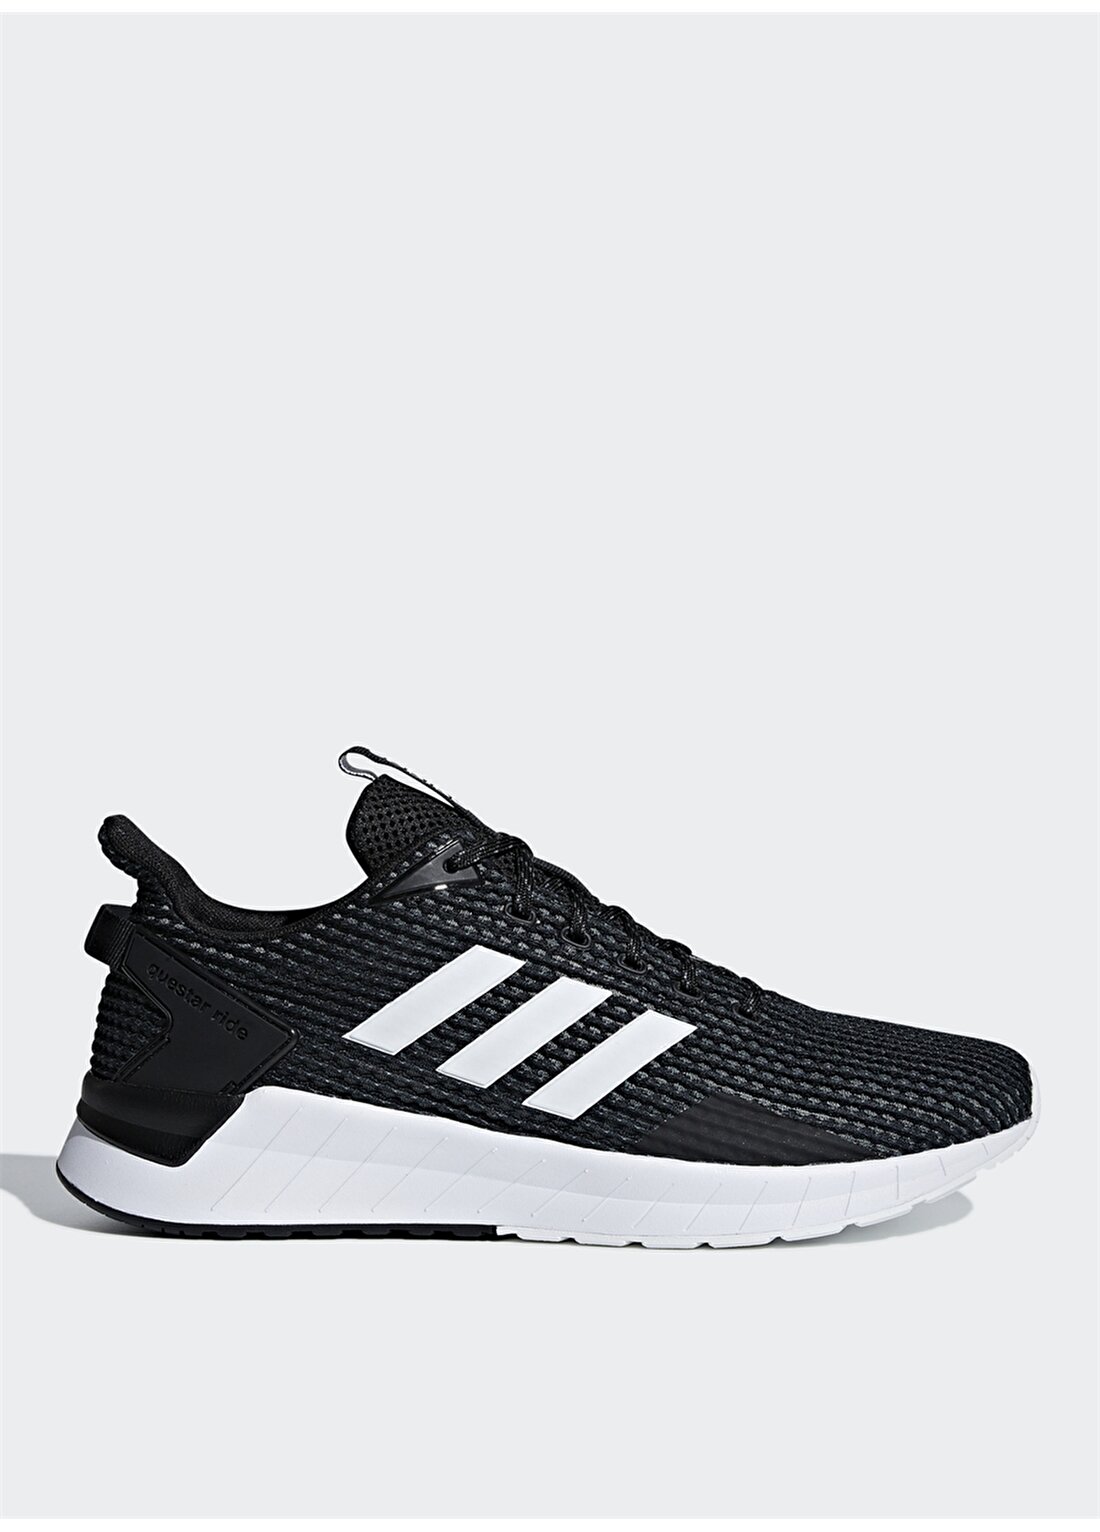 Adidas Questar Ride Koşu Ayakkabısı